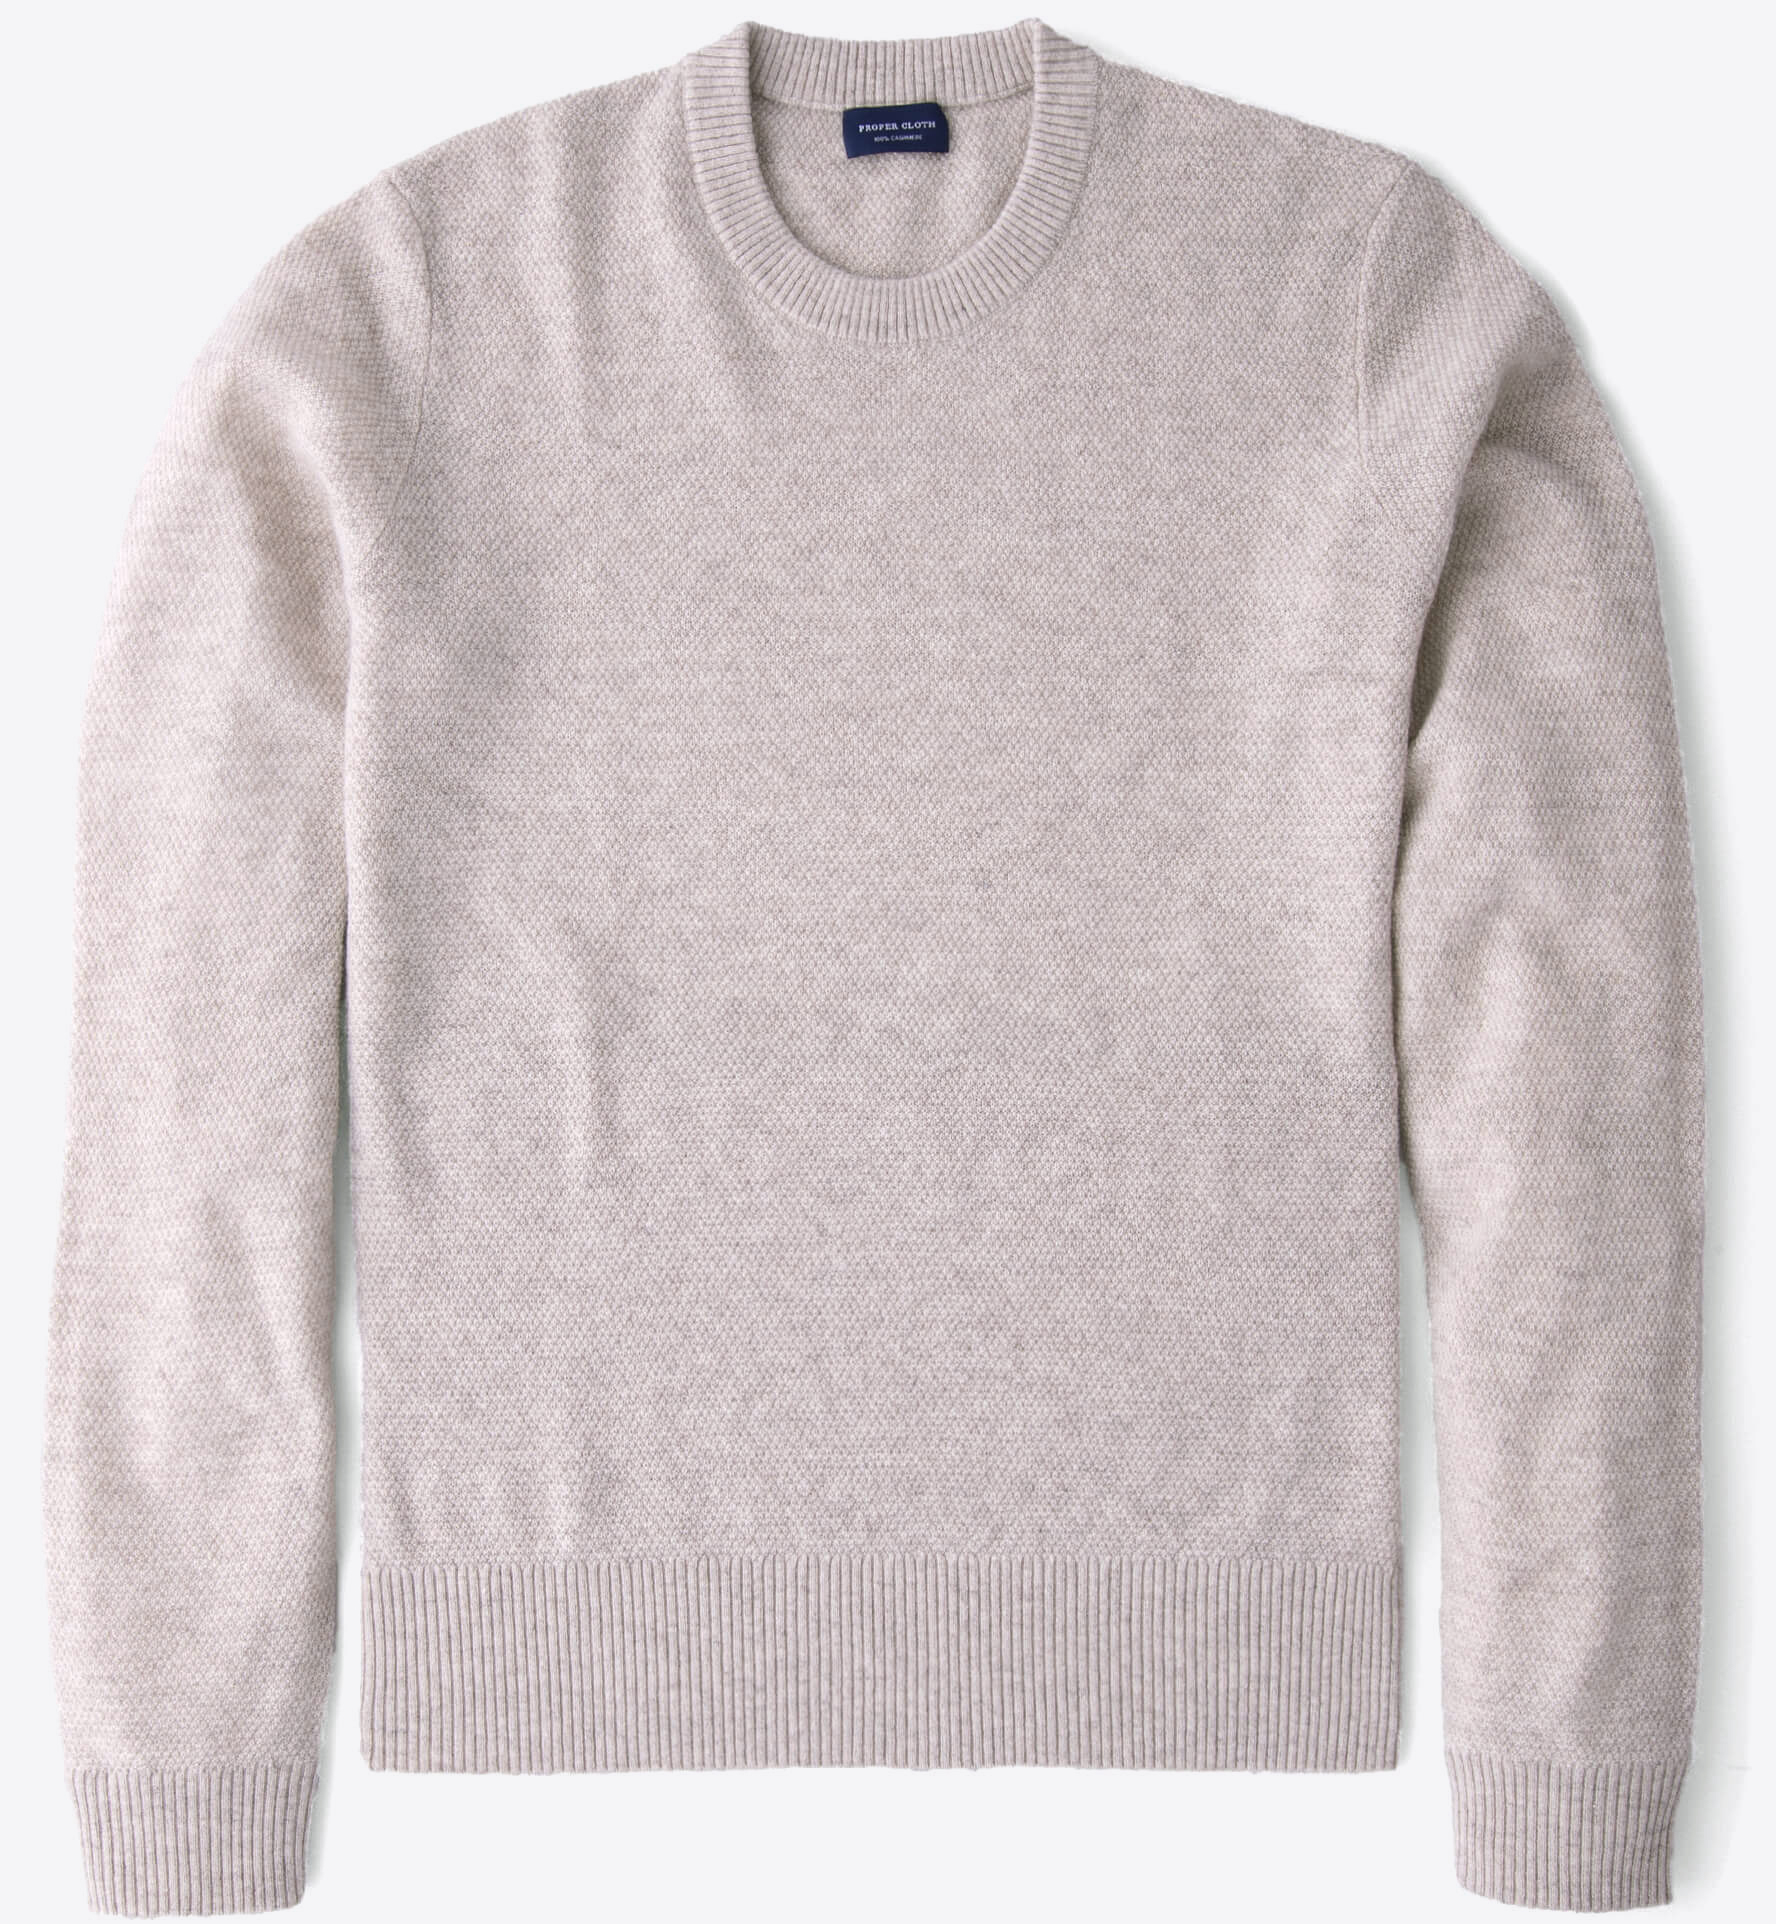 Wheat Cobble Stitch Cashmere Crewneck Sweater by Proper Cloth